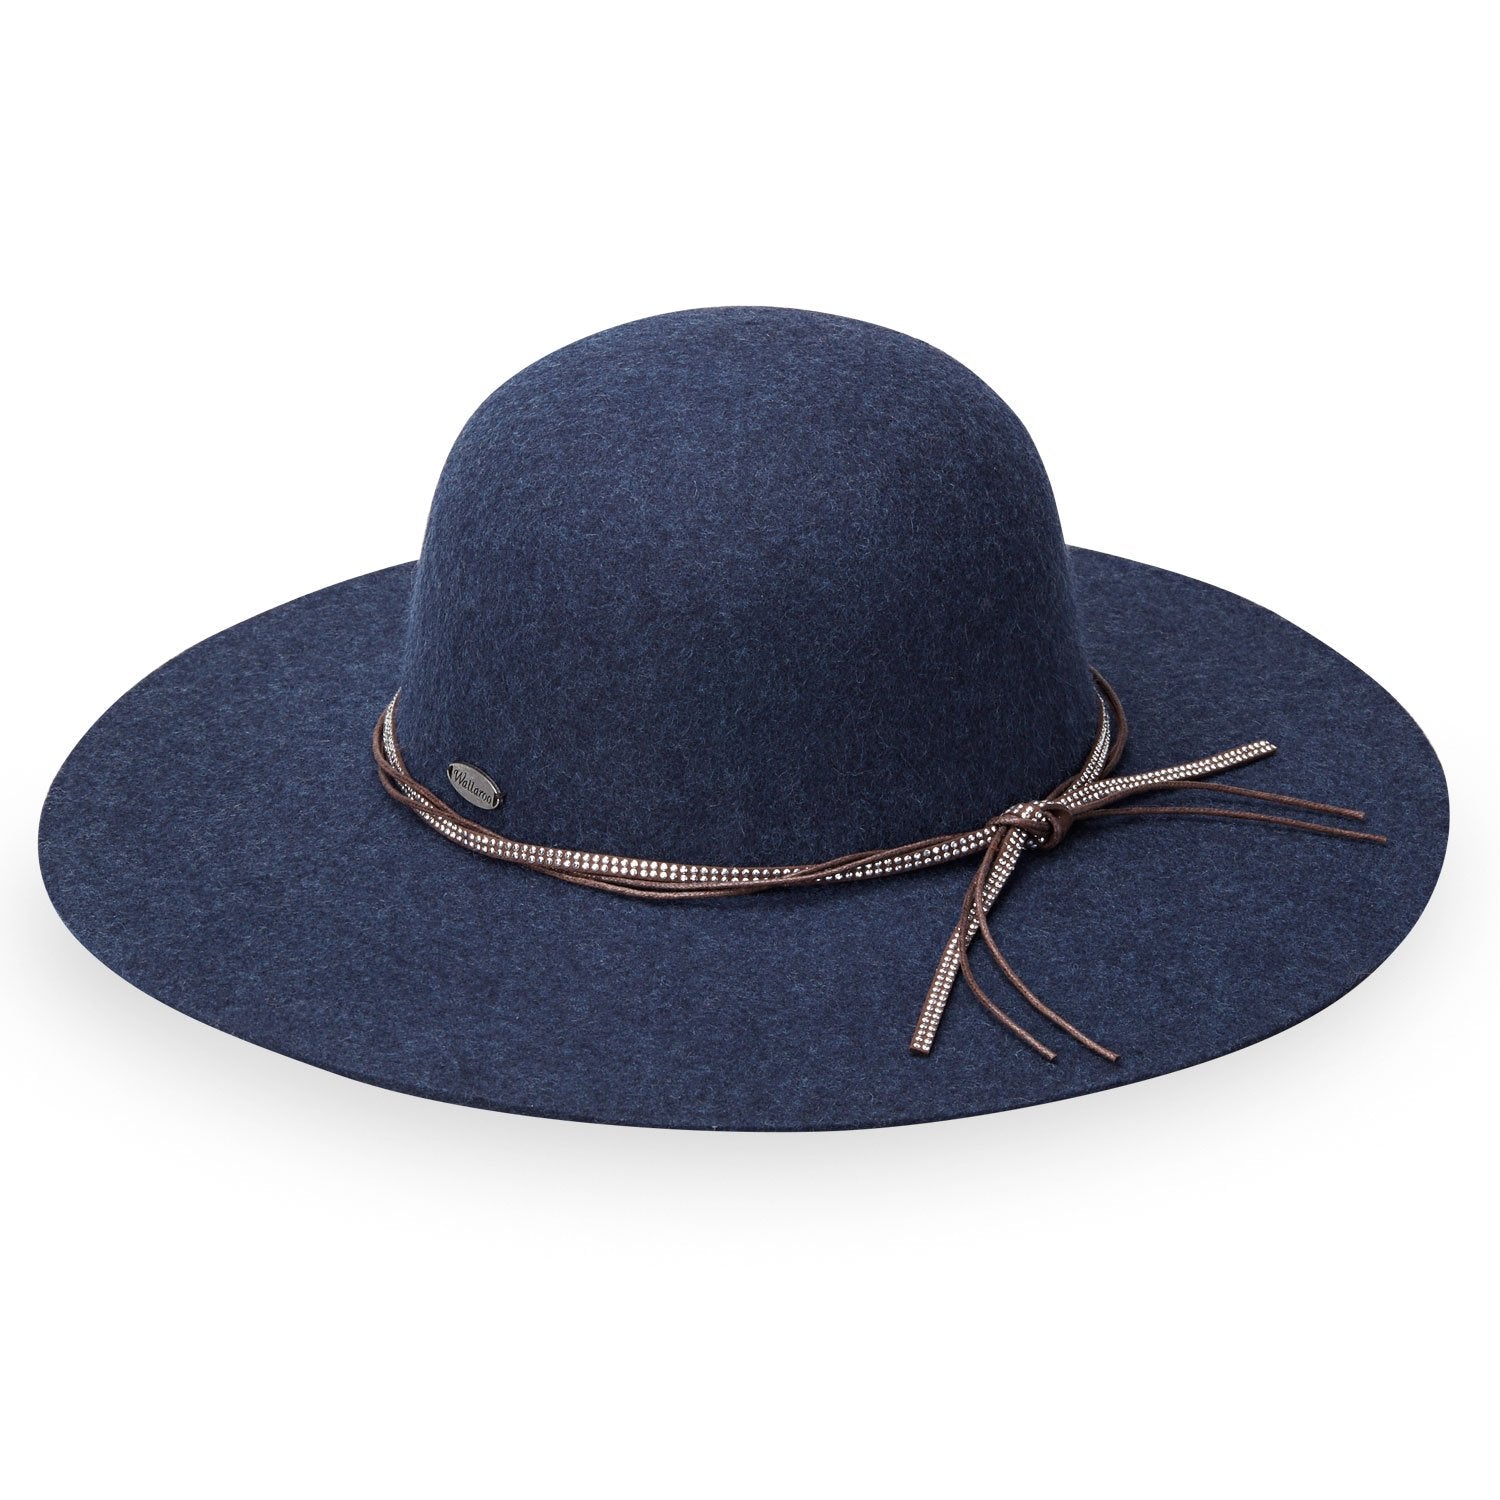 Featuring Cambria Women's UPF Wide Brim Wool Felt Sun Hat in Navy from Wallaroo